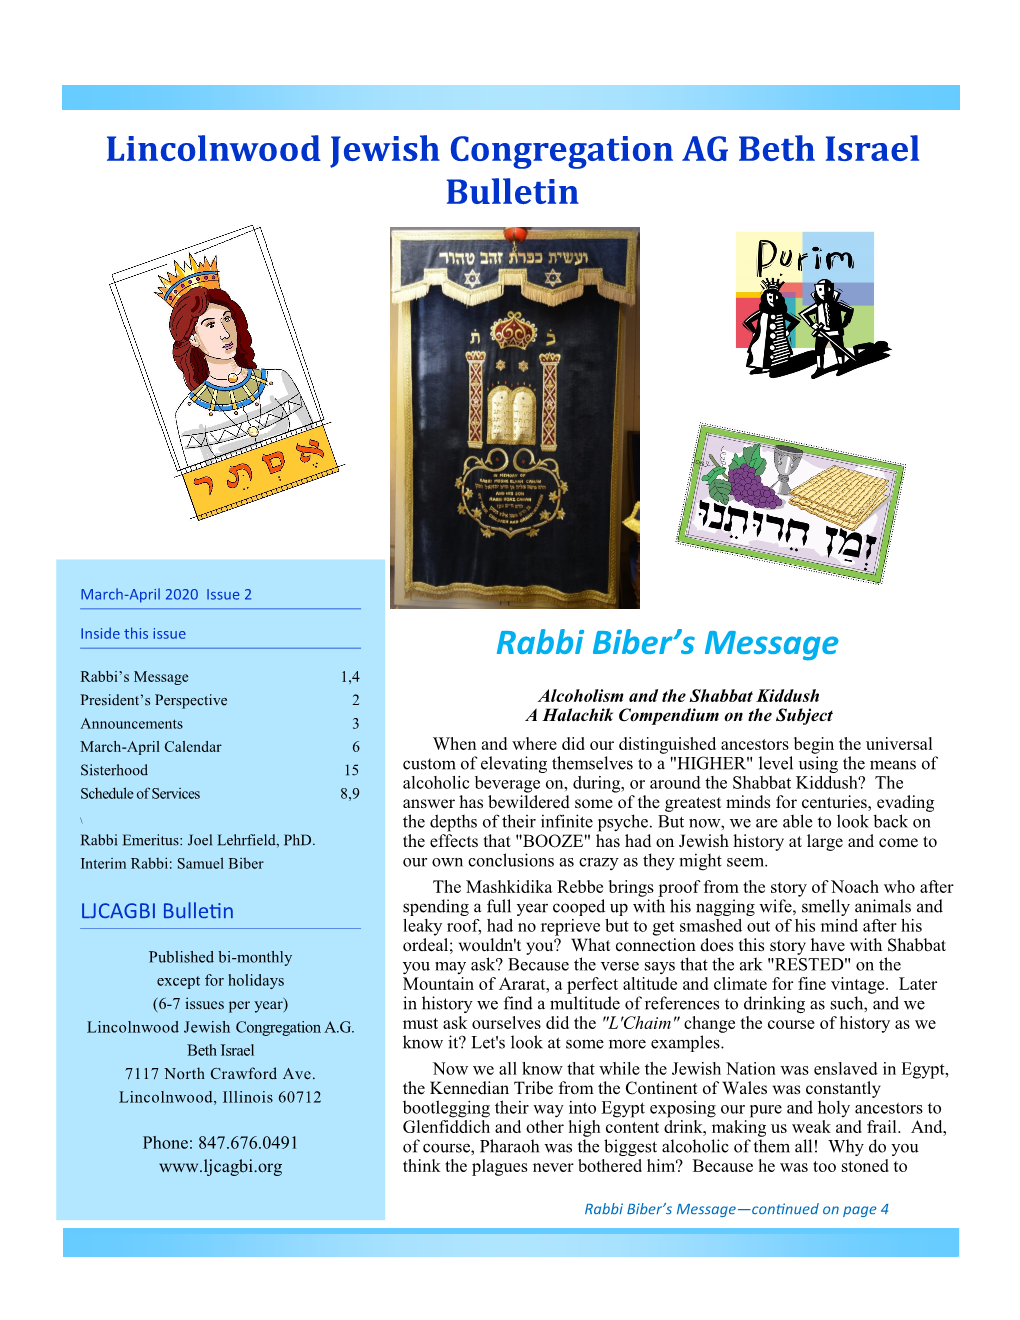 Rabbi Biber's Message Lincolnwood Jewish Congregation AG Beth